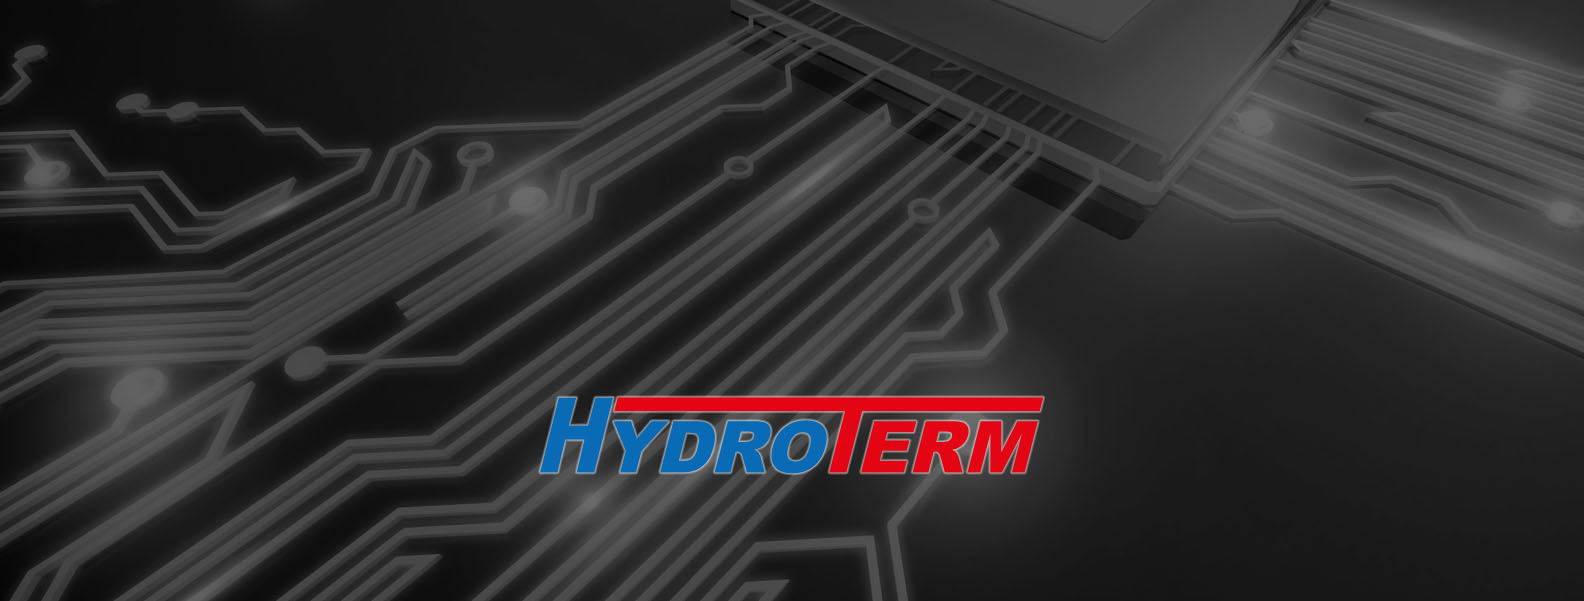 hydroterm